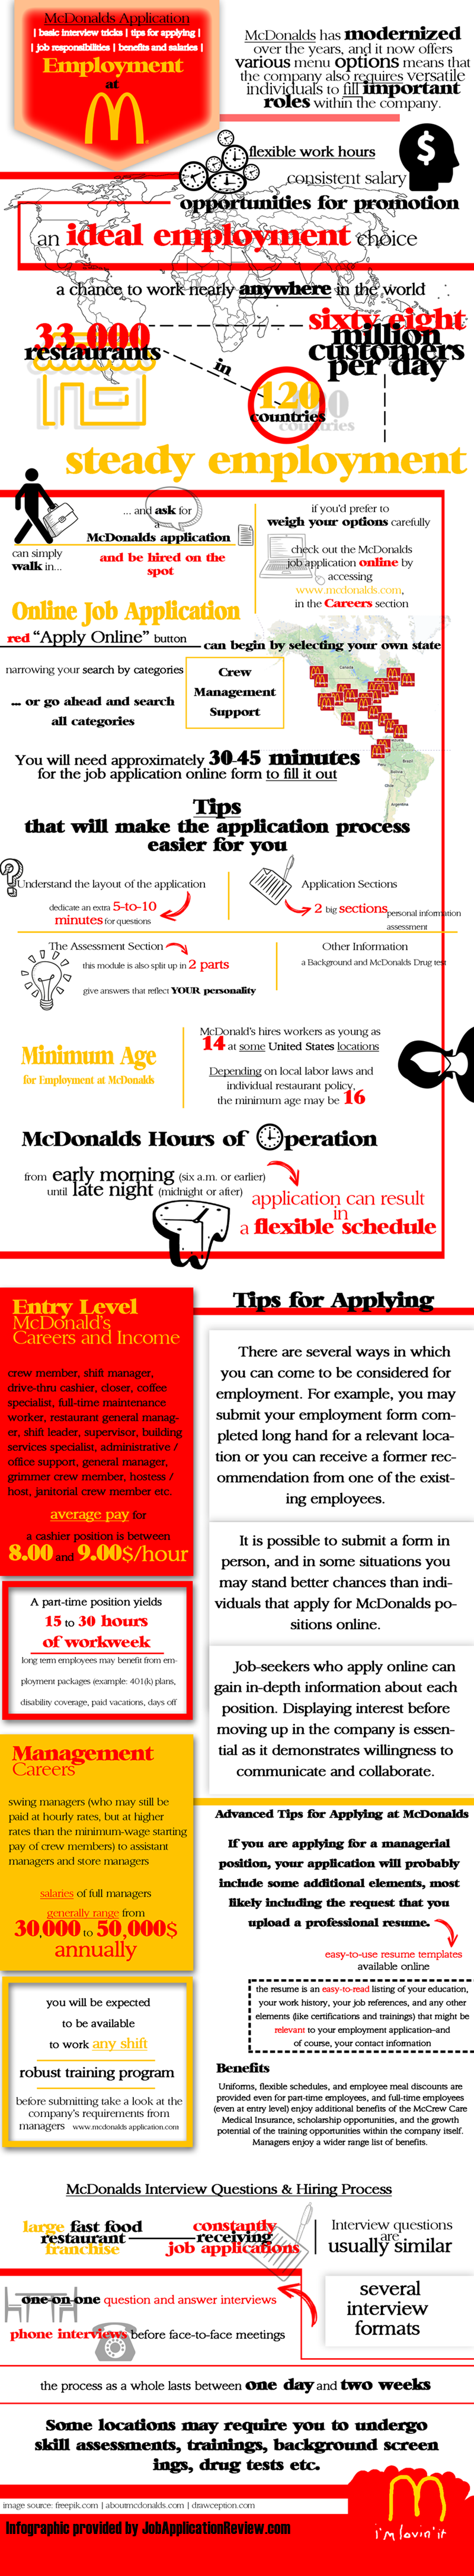 McDonalds Application - Employment at McDonalds